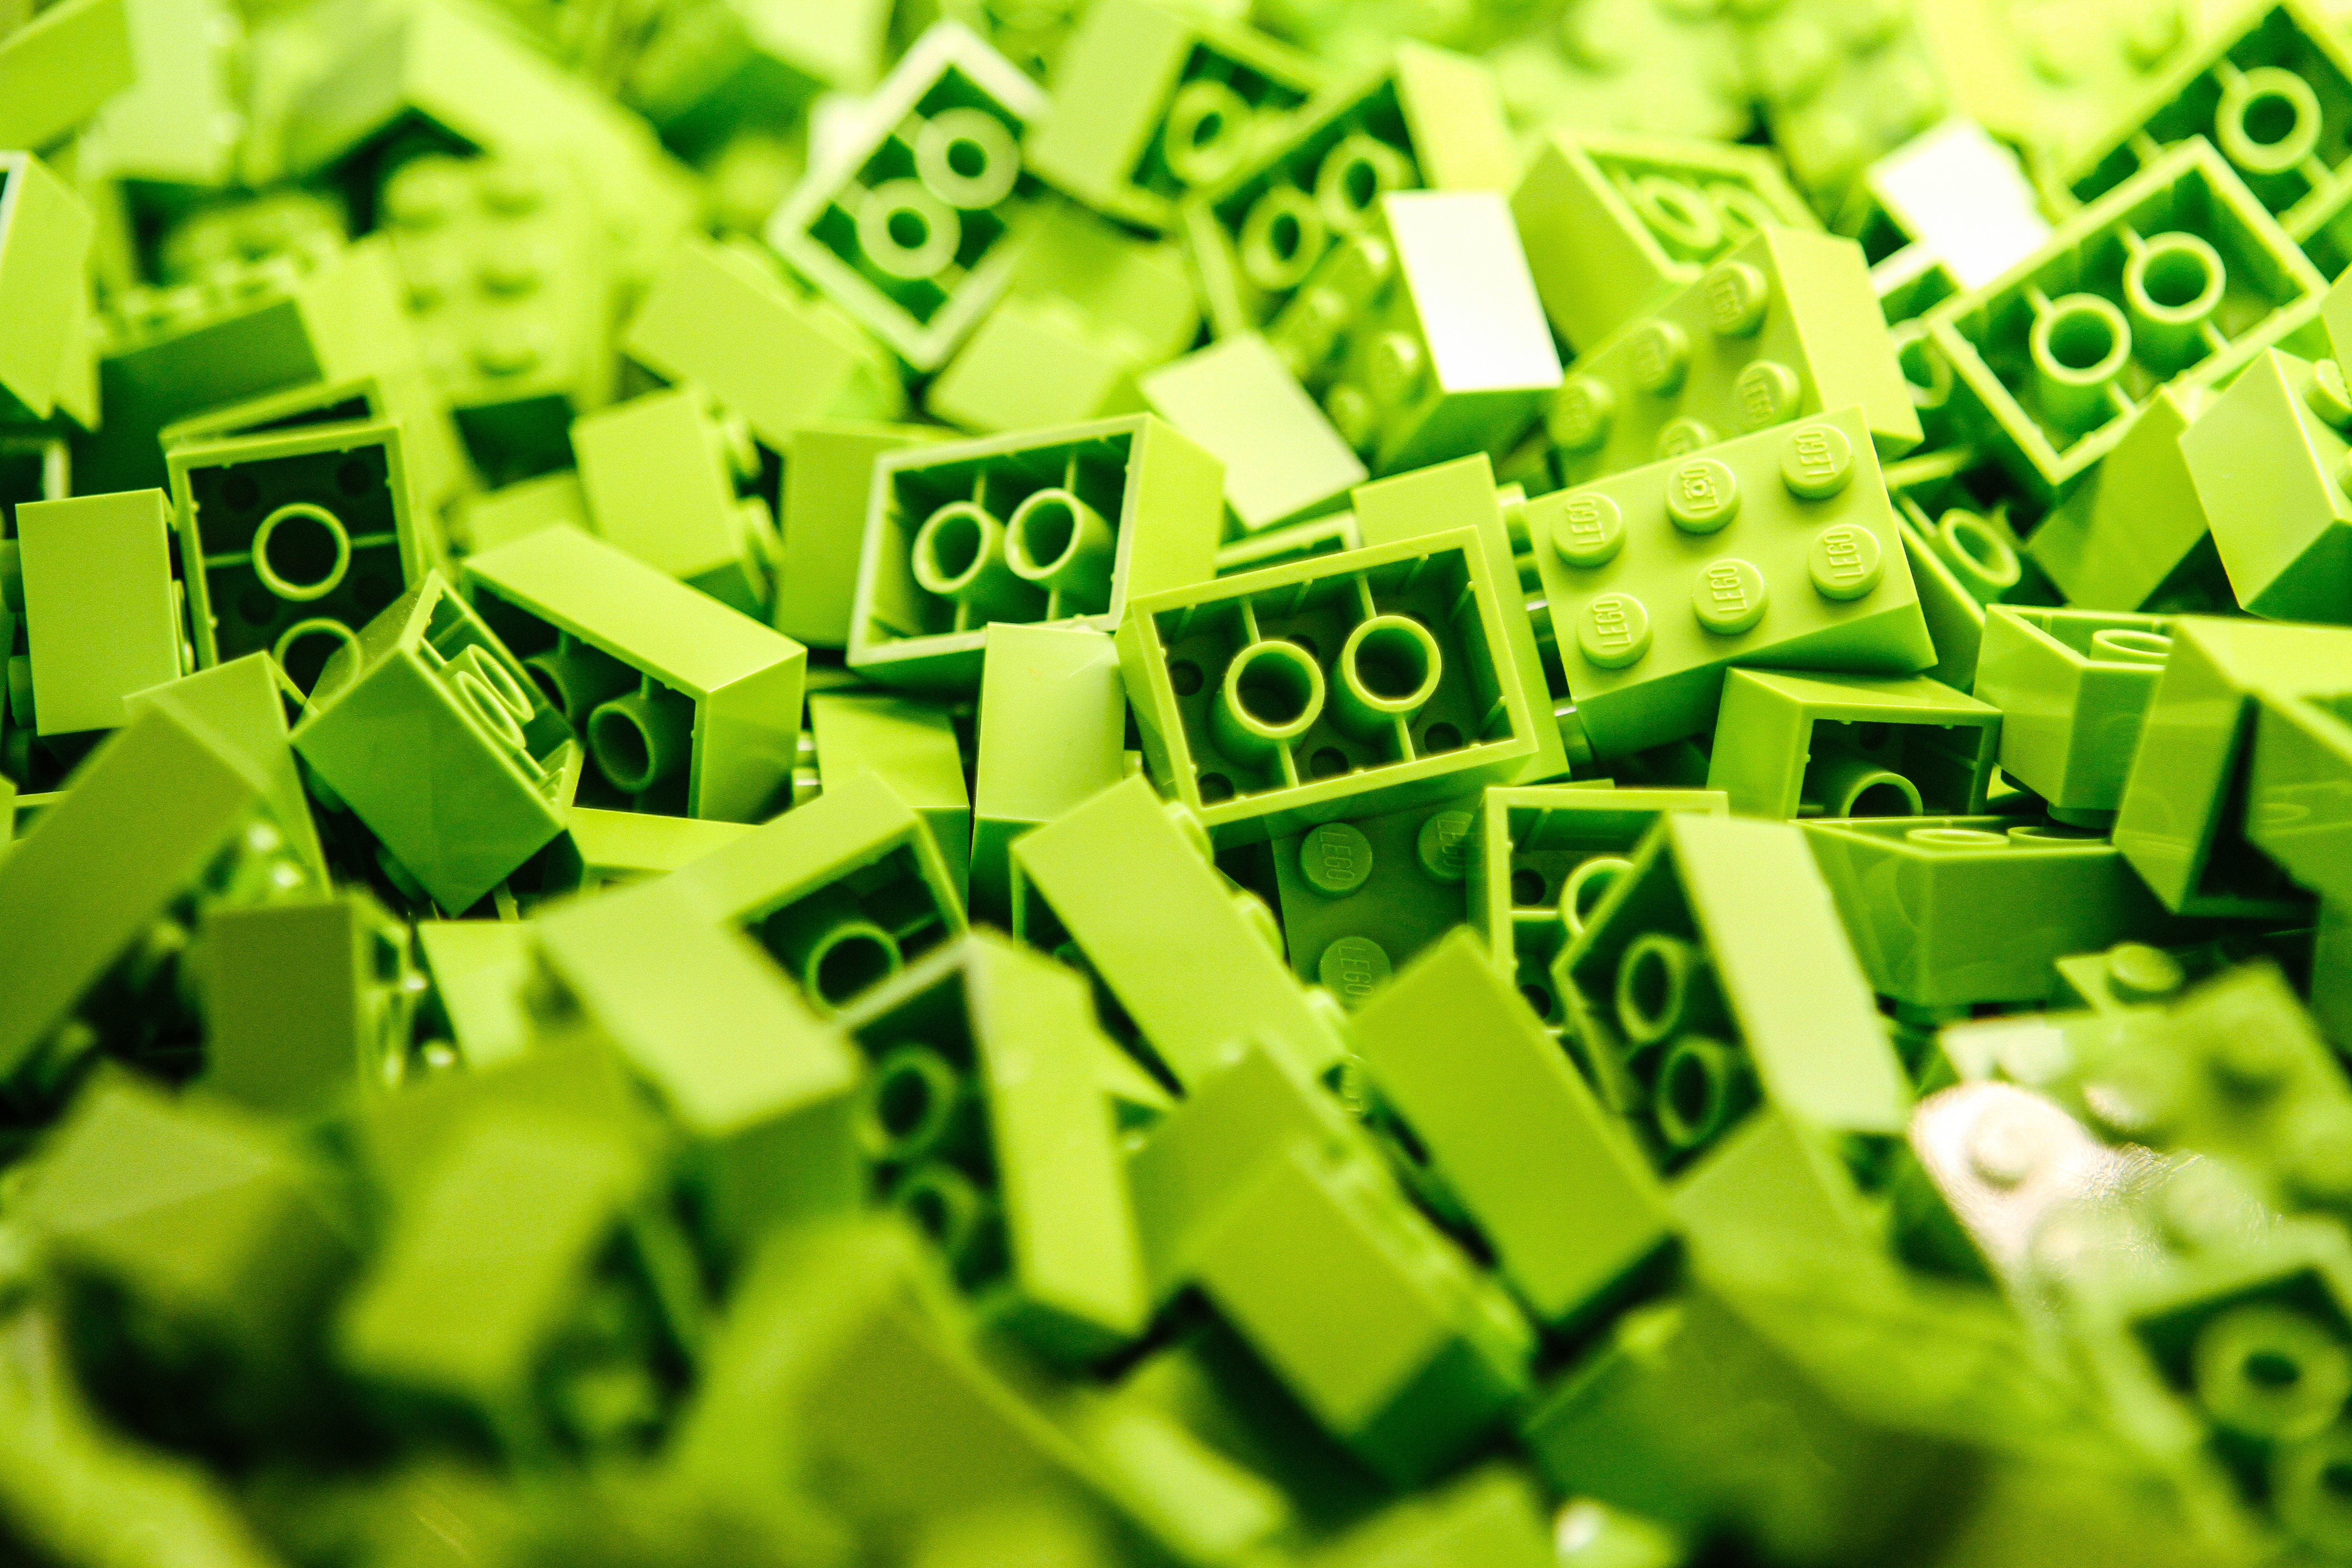 lego green background